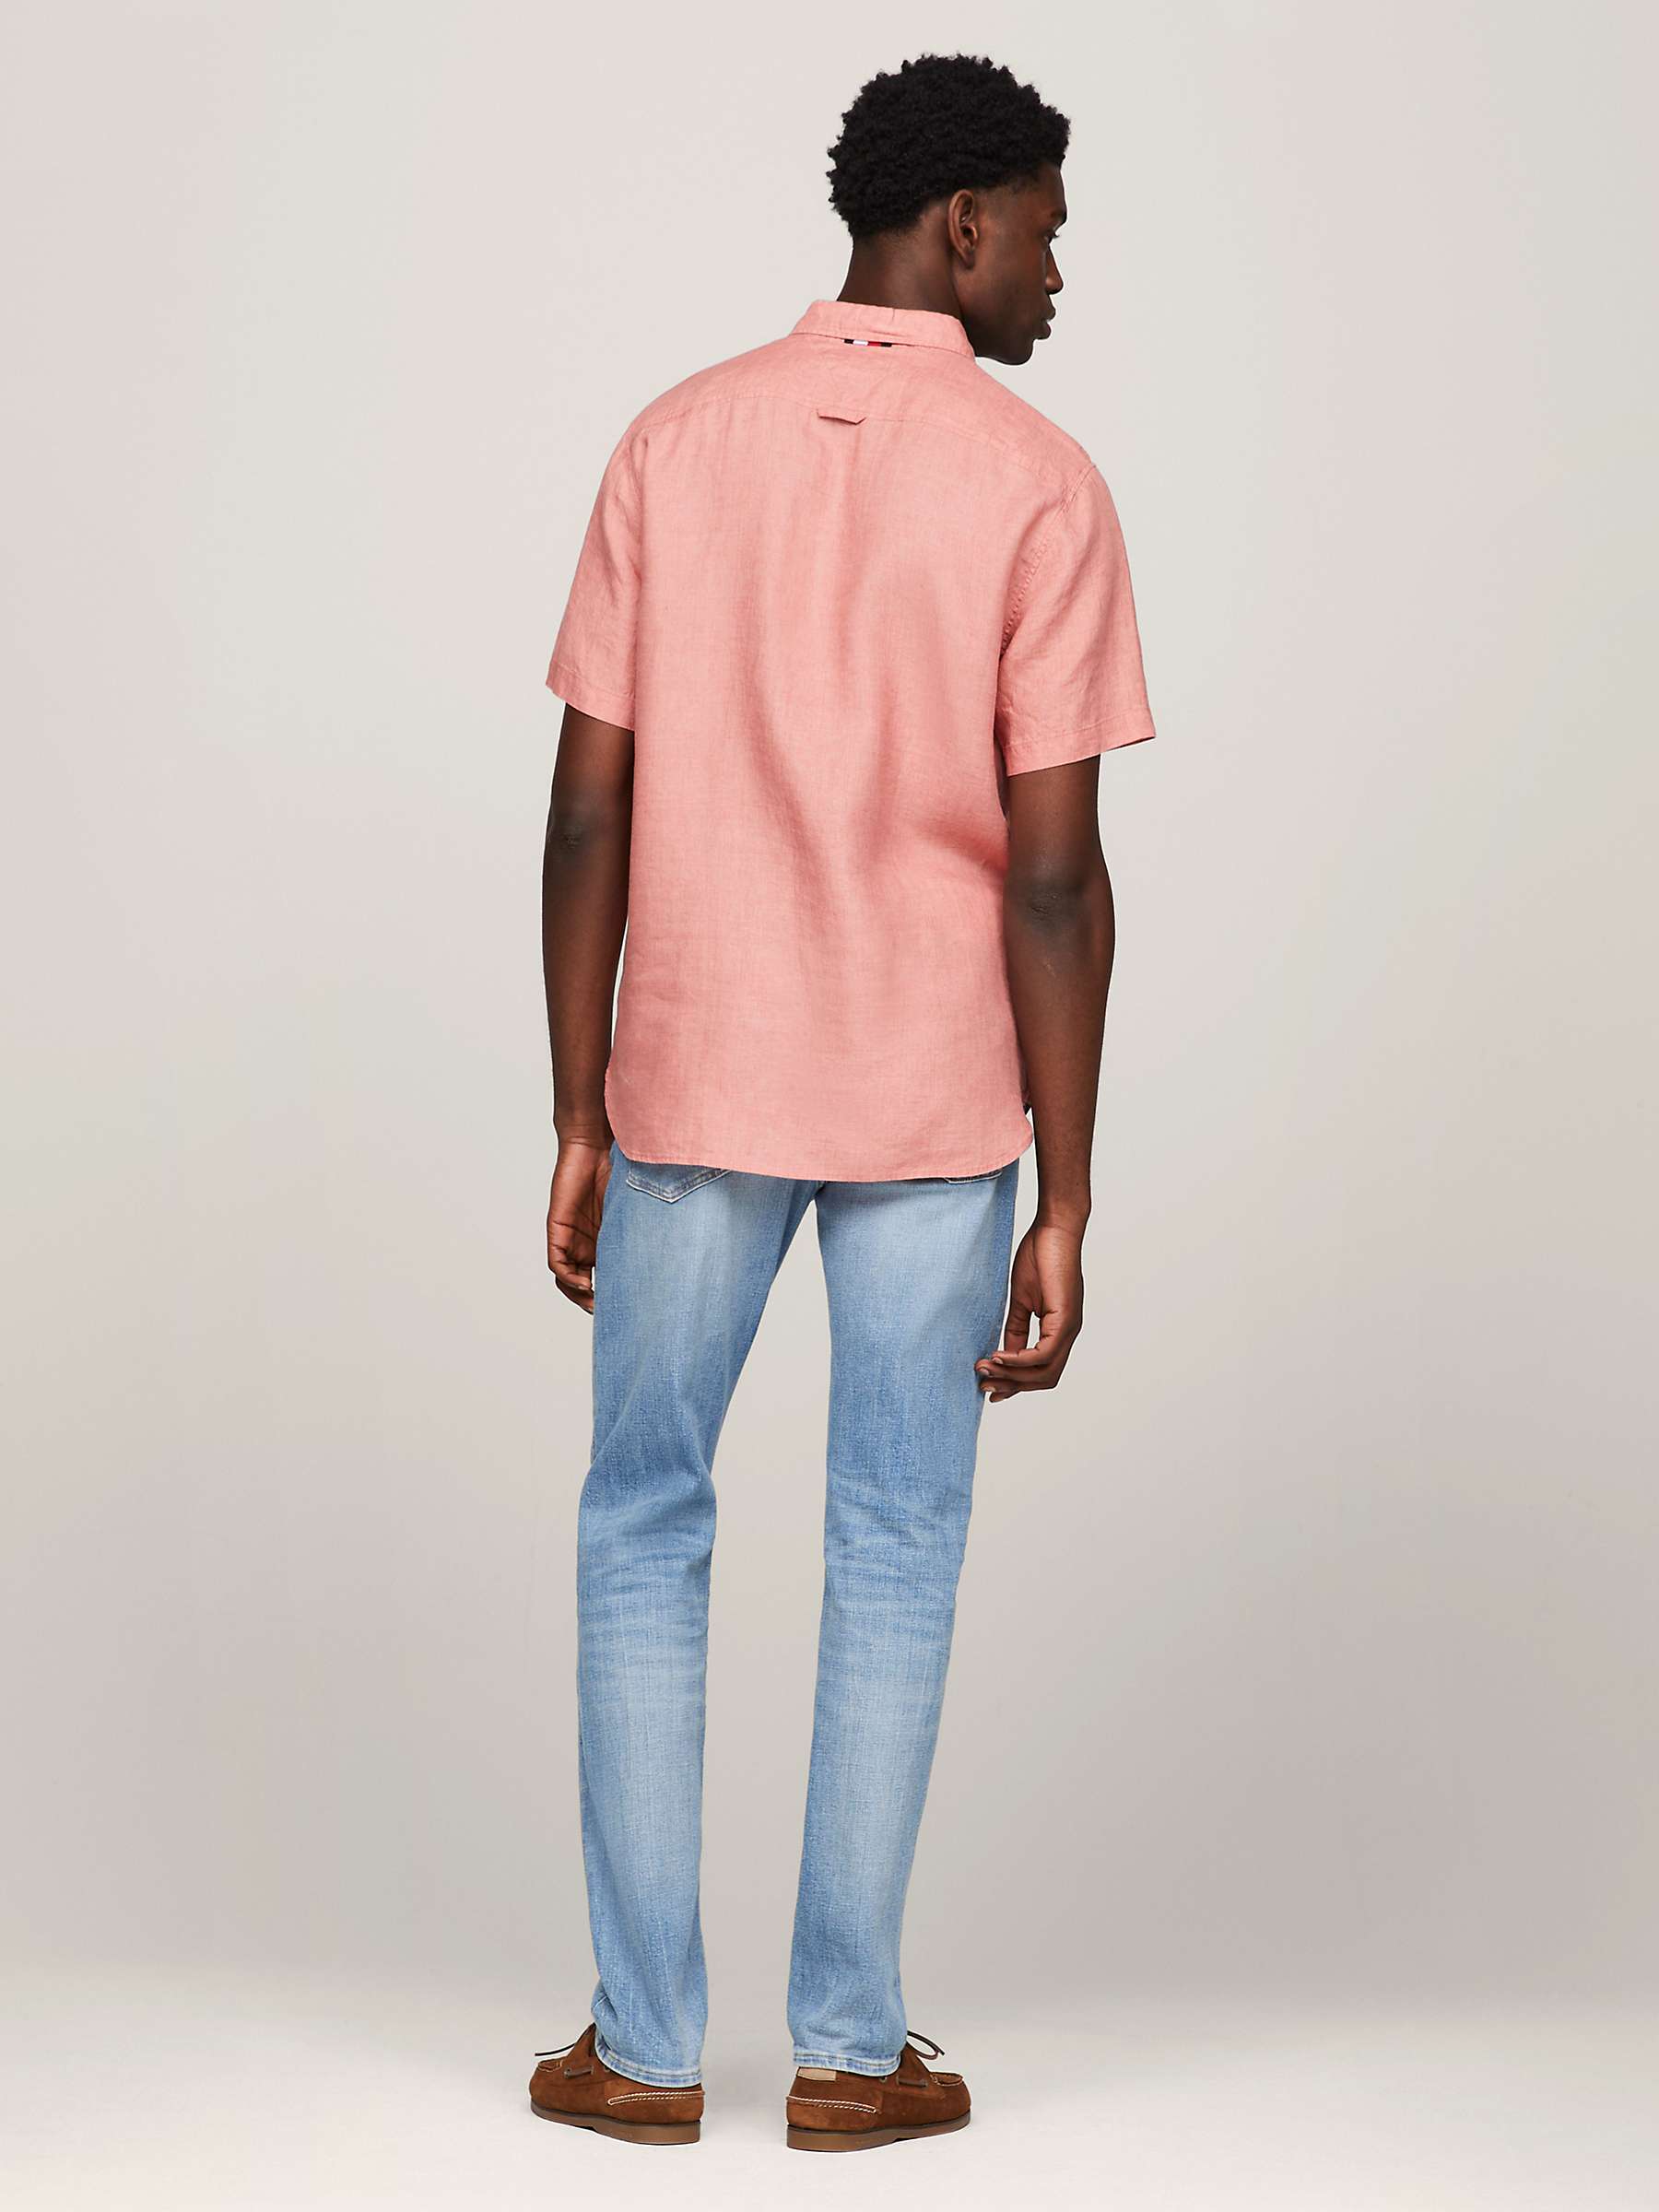 Buy Tommy Hilfiger Pigment Dyed Linen Shirt Online at johnlewis.com